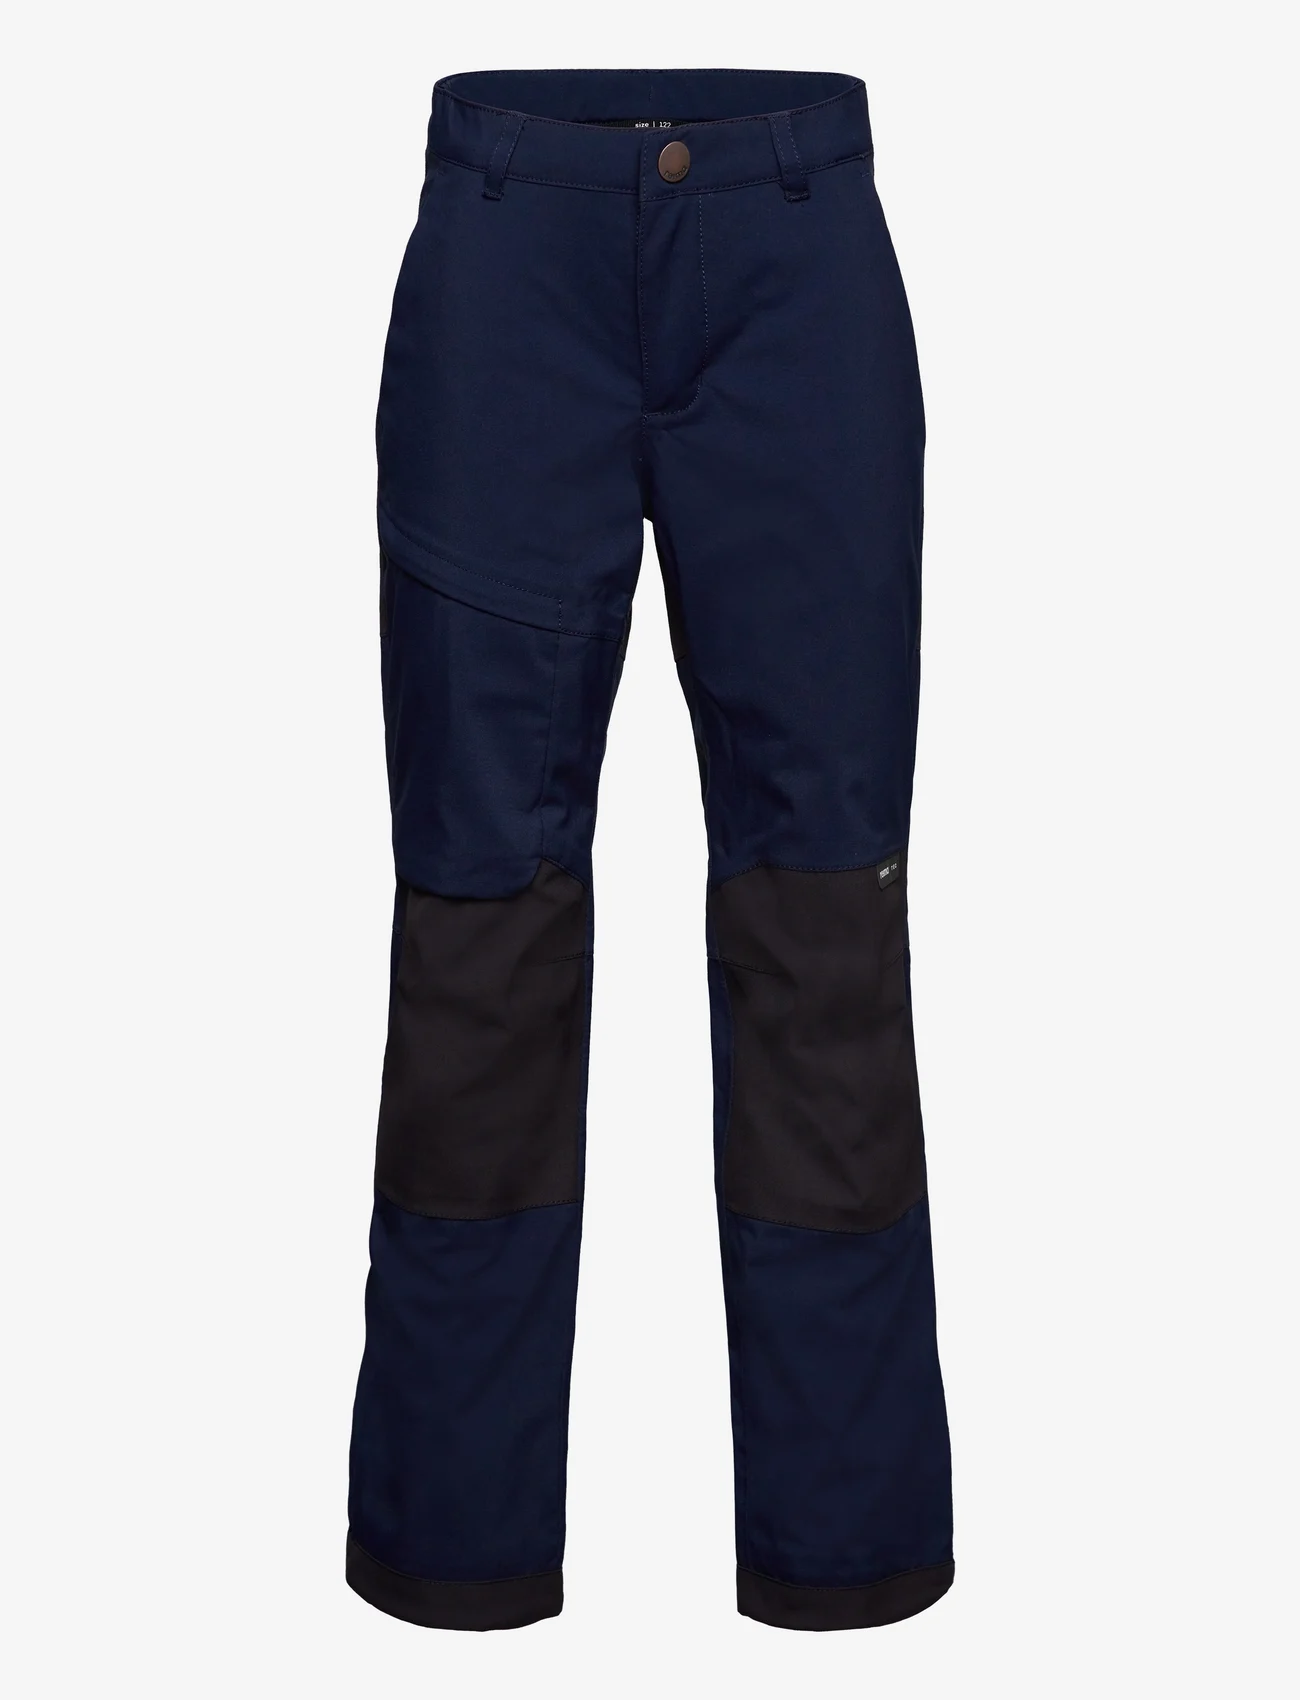 Reima - Reimatec pants, Sampu - nederdelar - navy - 0